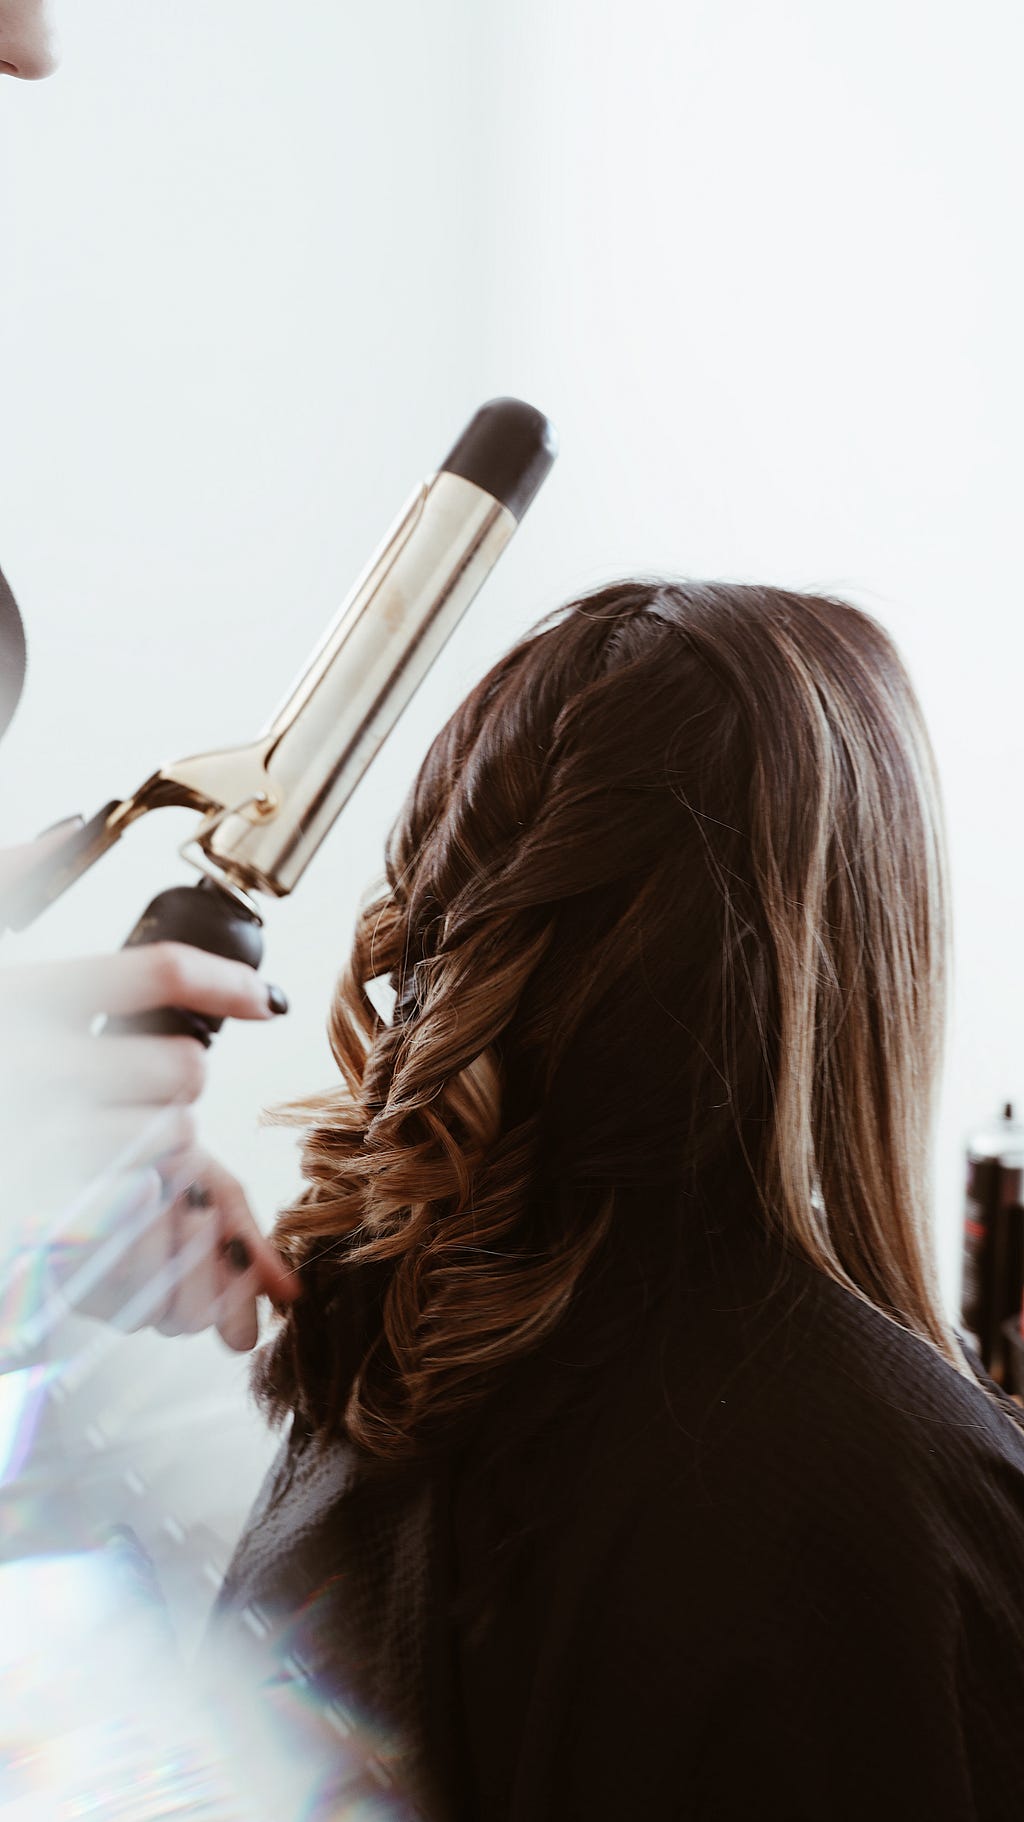 Hair salon business owner curling a client’s hair